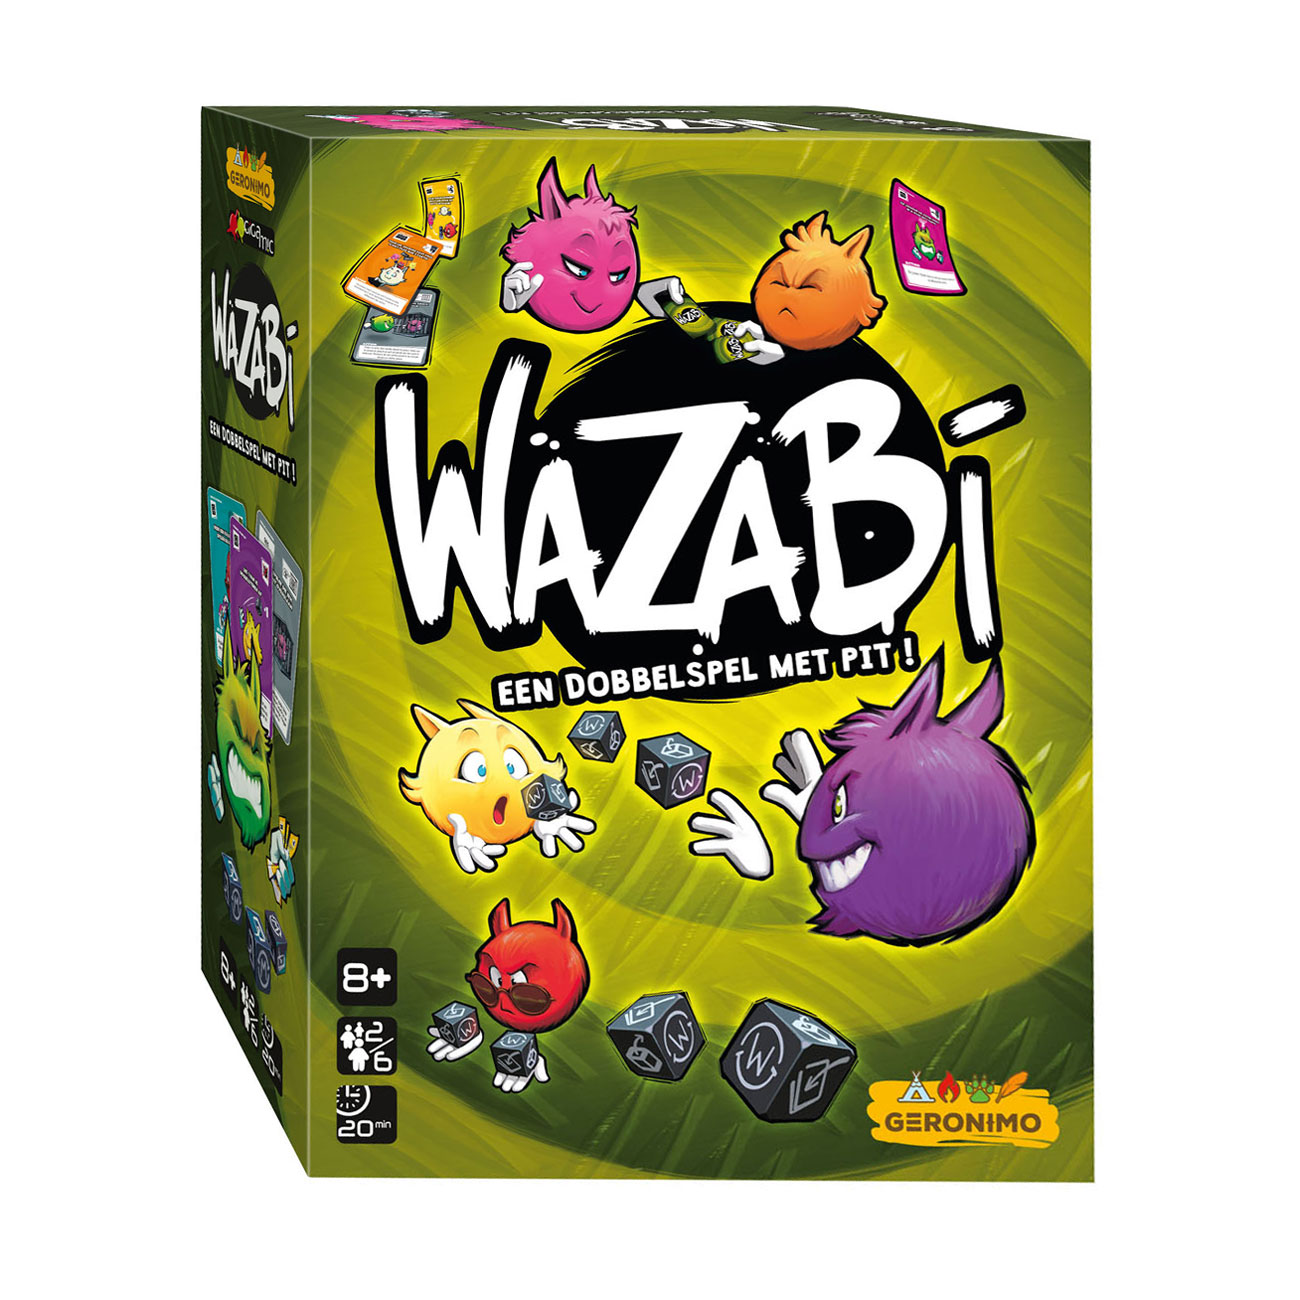 Acheter Jeu de dés Wazabi en ligne?